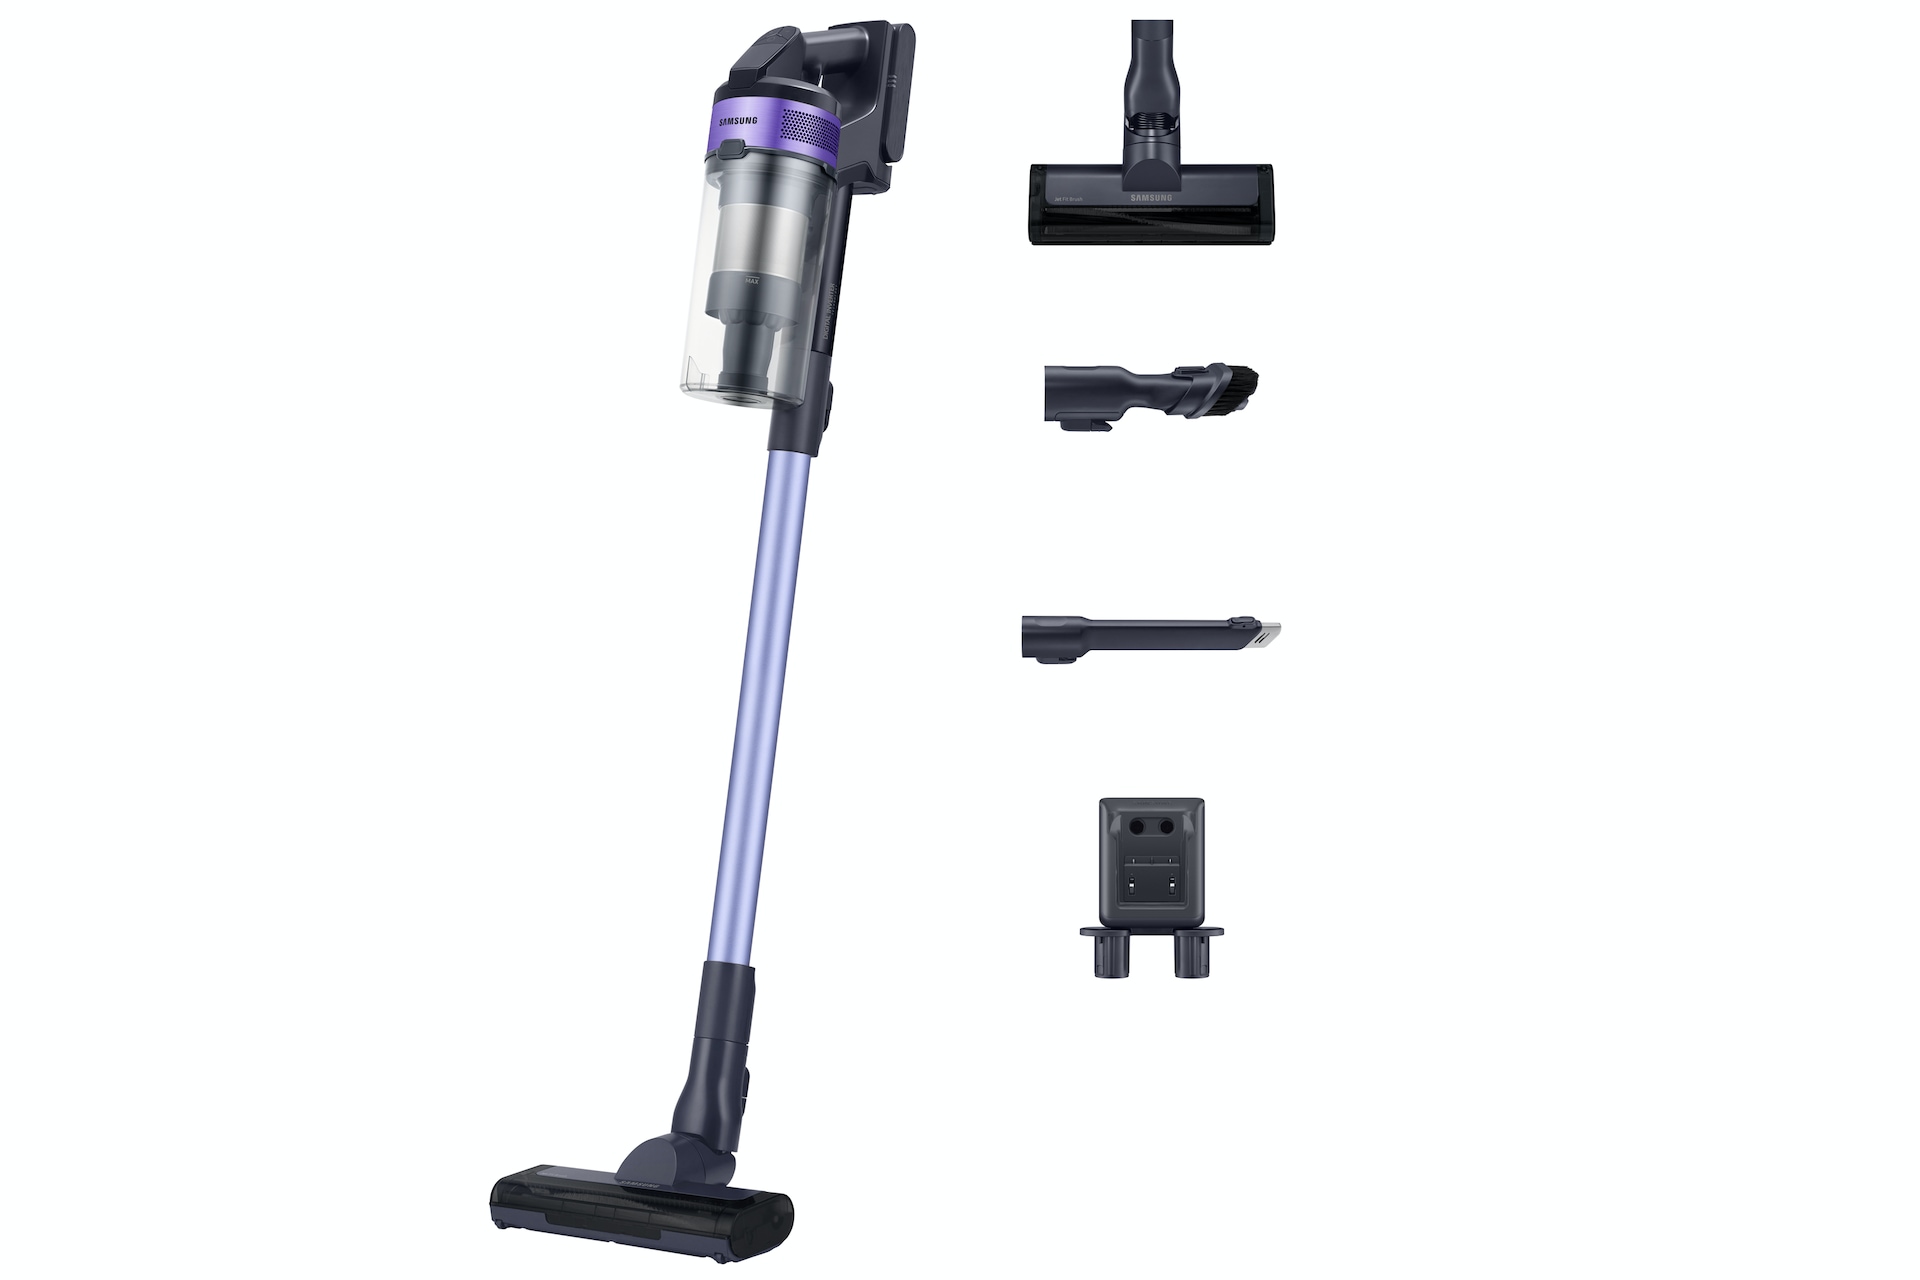 Samsung VS15A6031R4 Jet 60 Turbo Cordless vacuum cleaner - purple